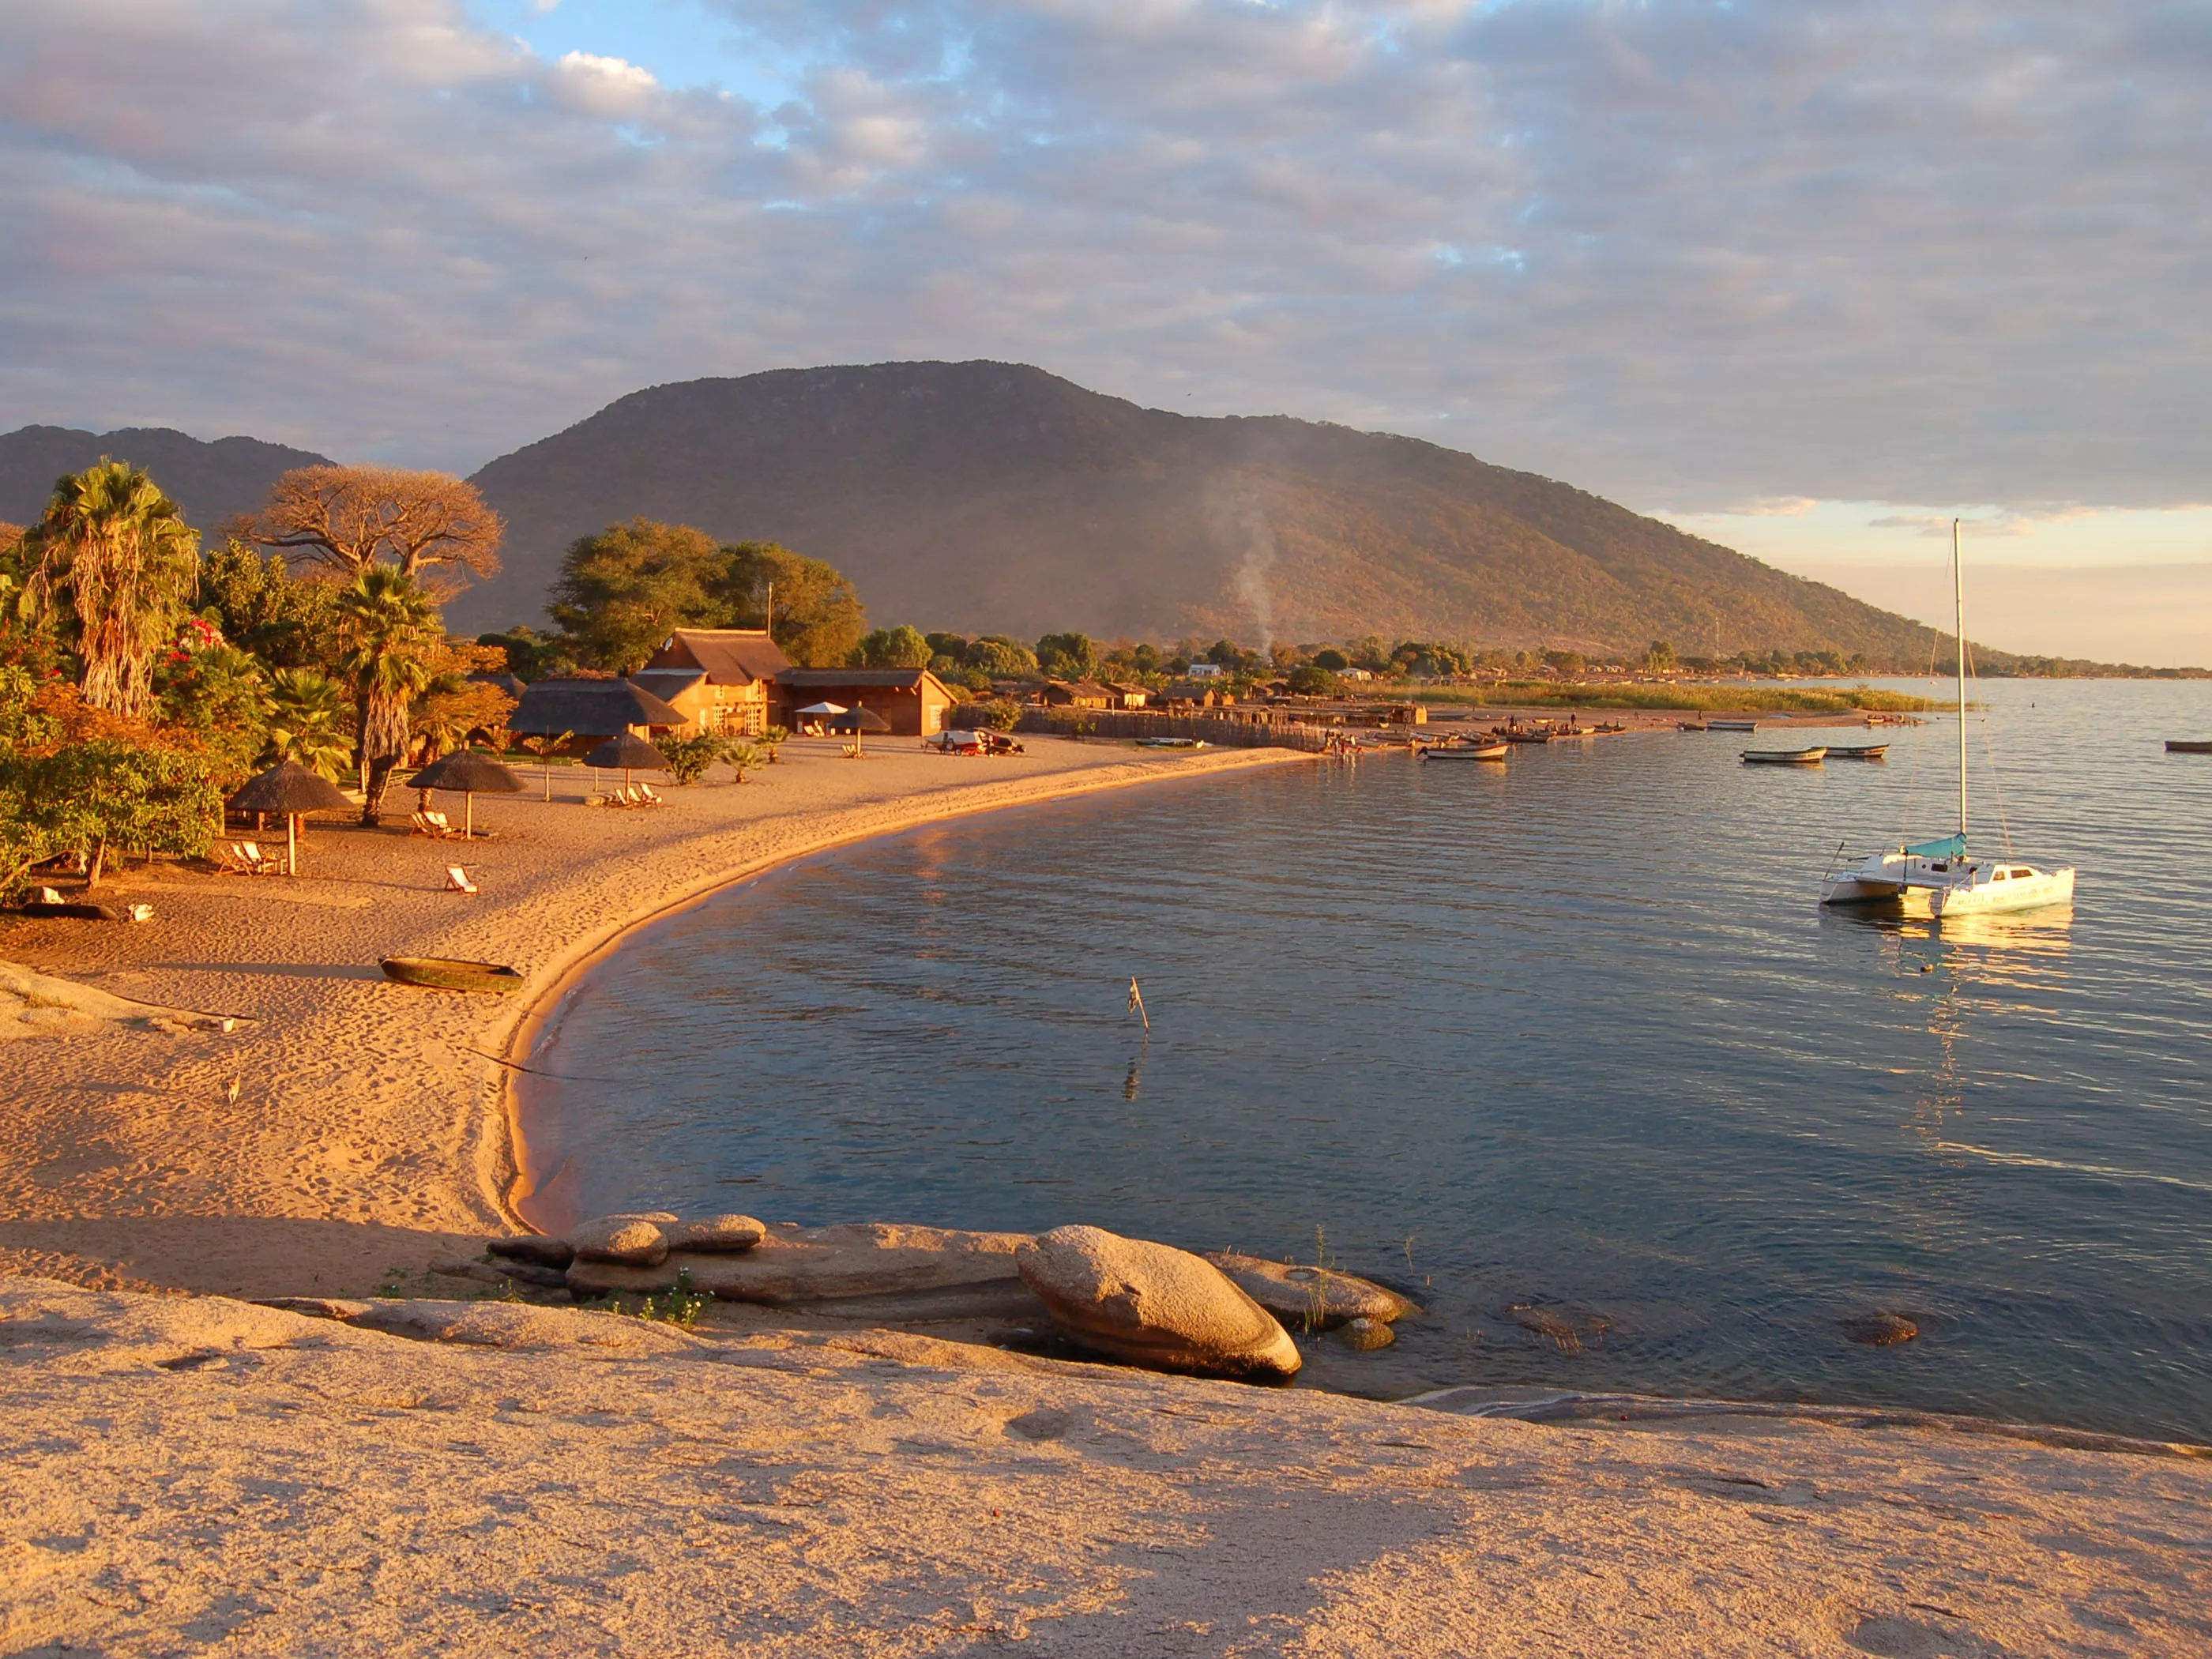 Lake Chilwa in Malawi, Africa | Lakes - Rated 0.7